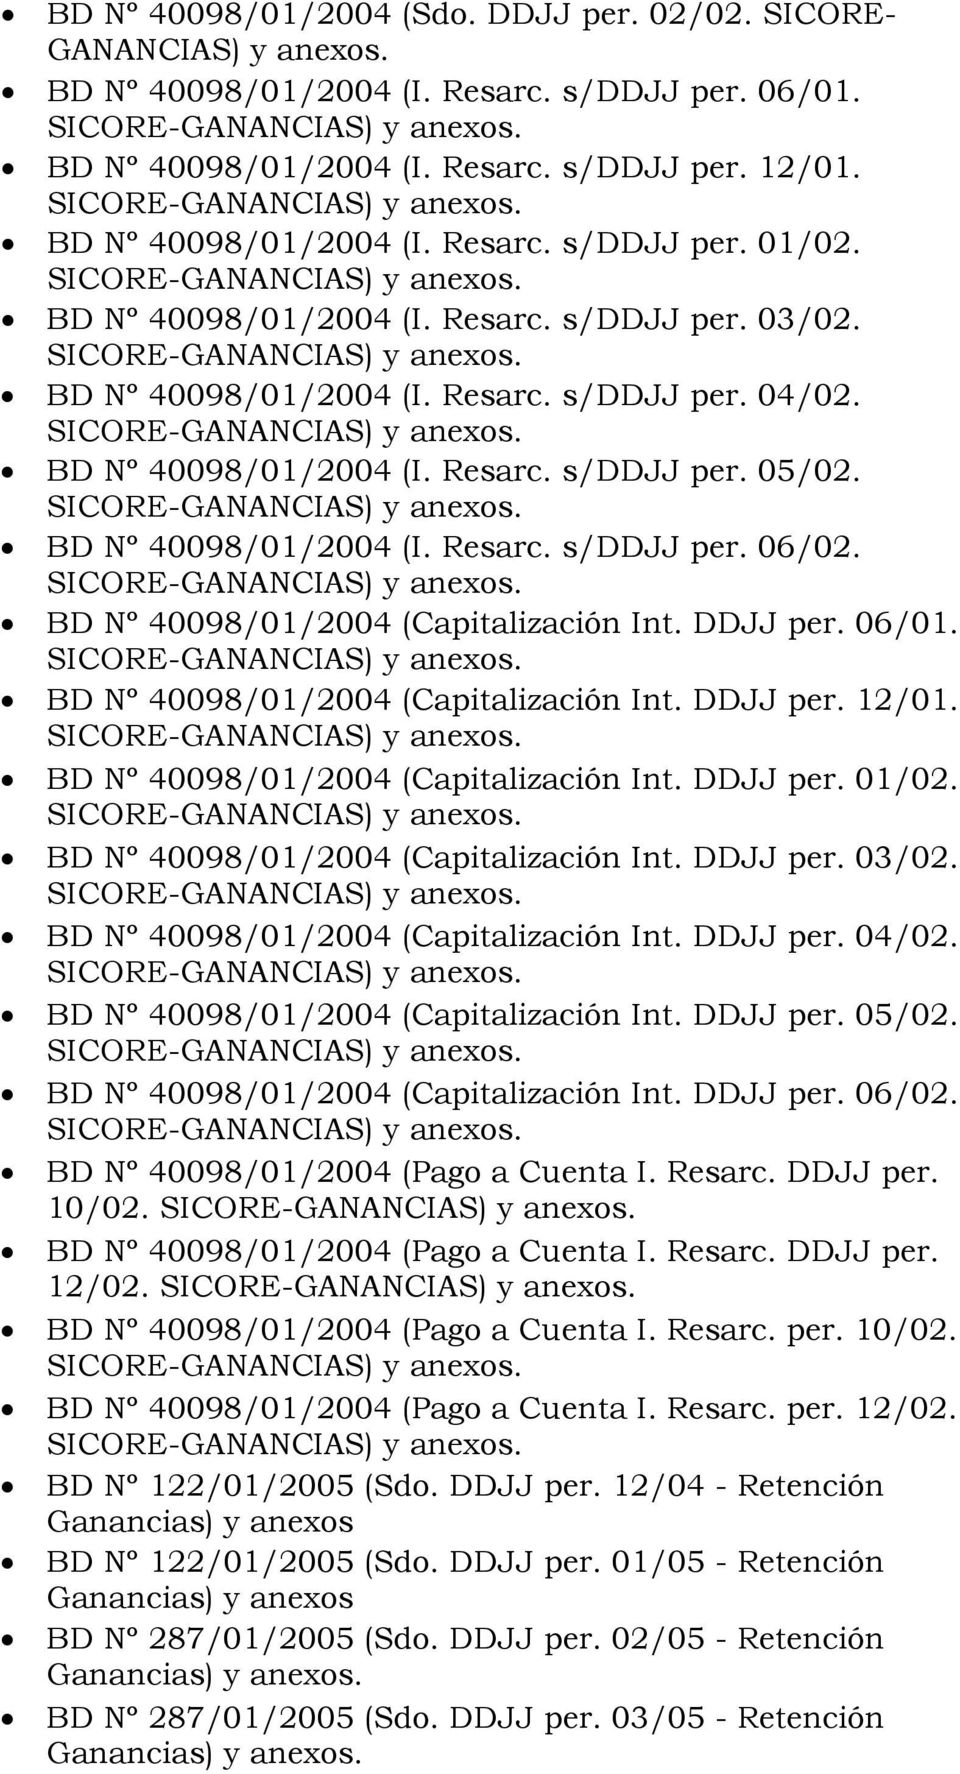 SICORE-GANANCIAS) y anexos. BD Nº 40098/01/2004 (I. Resarc. s/ddjj per. 05/02. SICORE-GANANCIAS) y anexos. BD Nº 40098/01/2004 (I. Resarc. s/ddjj per. 06/02. SICORE-GANANCIAS) y anexos. BD Nº 40098/01/2004 (Capitalización Int.